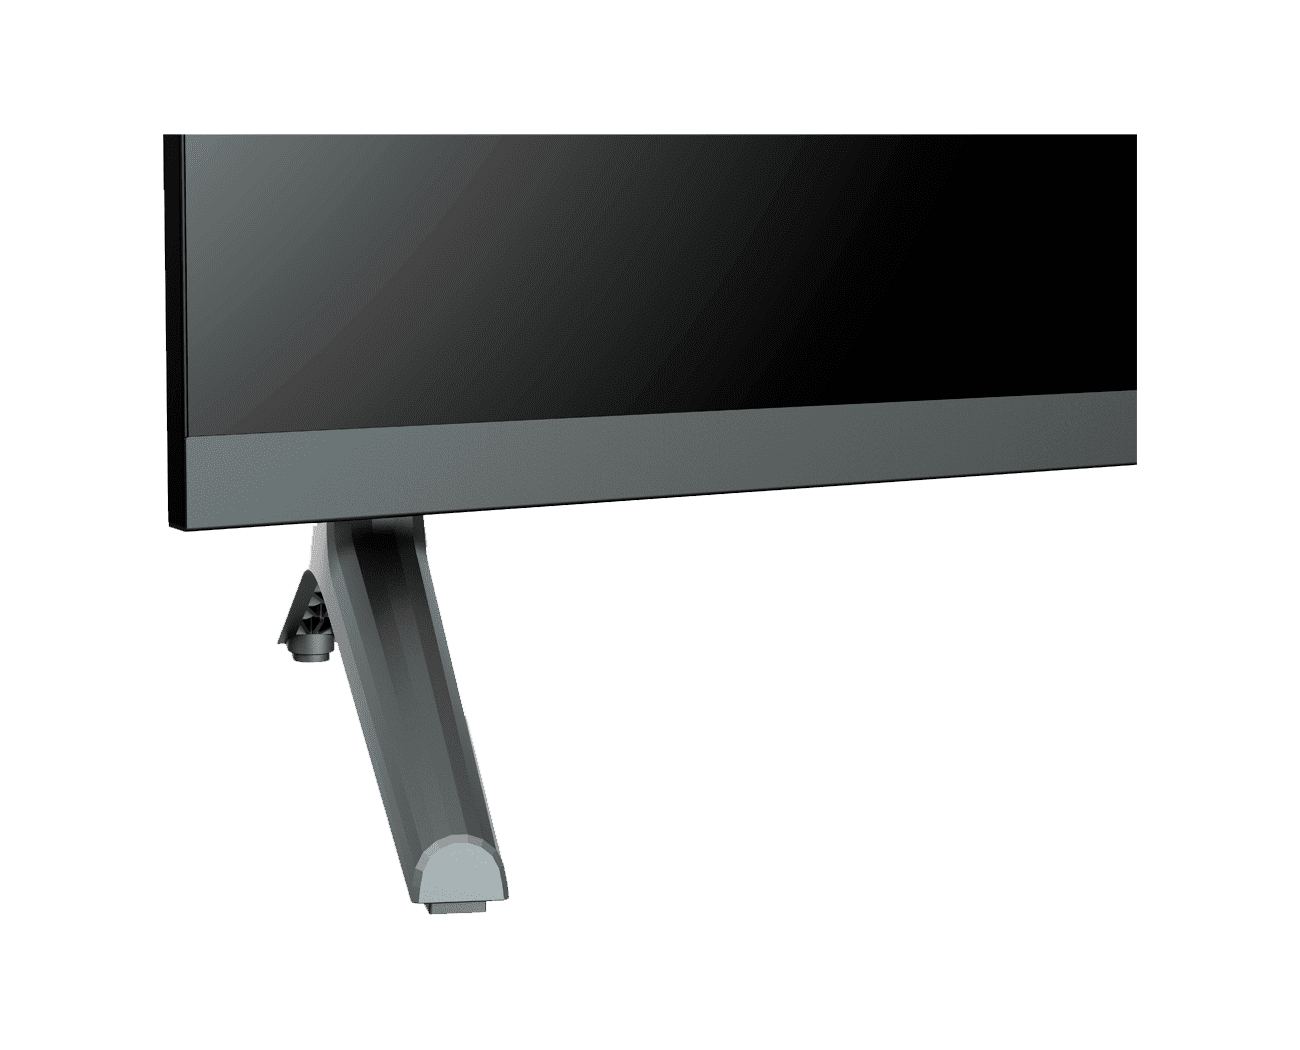 TV Full-HD Smart TV LED Blaupunkt 32FB5000